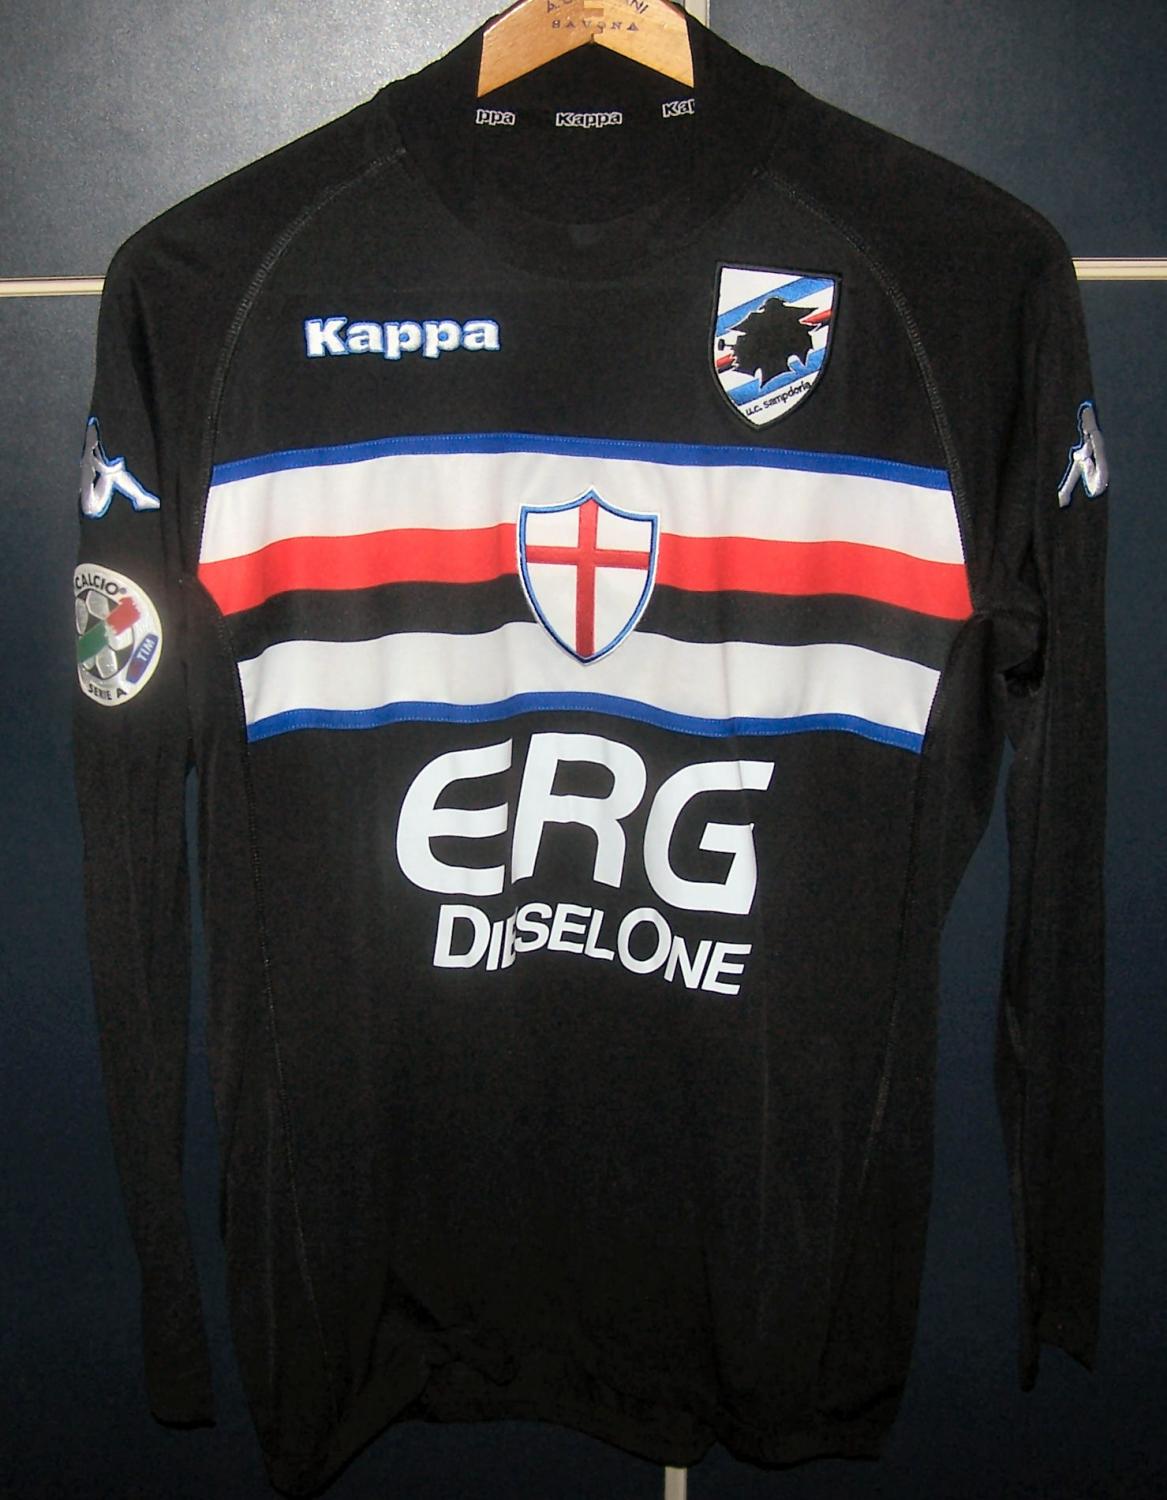 herder Categorie wang Sampdoria Third football shirt 2005 - 2006. Sponsored by ERG Mobile